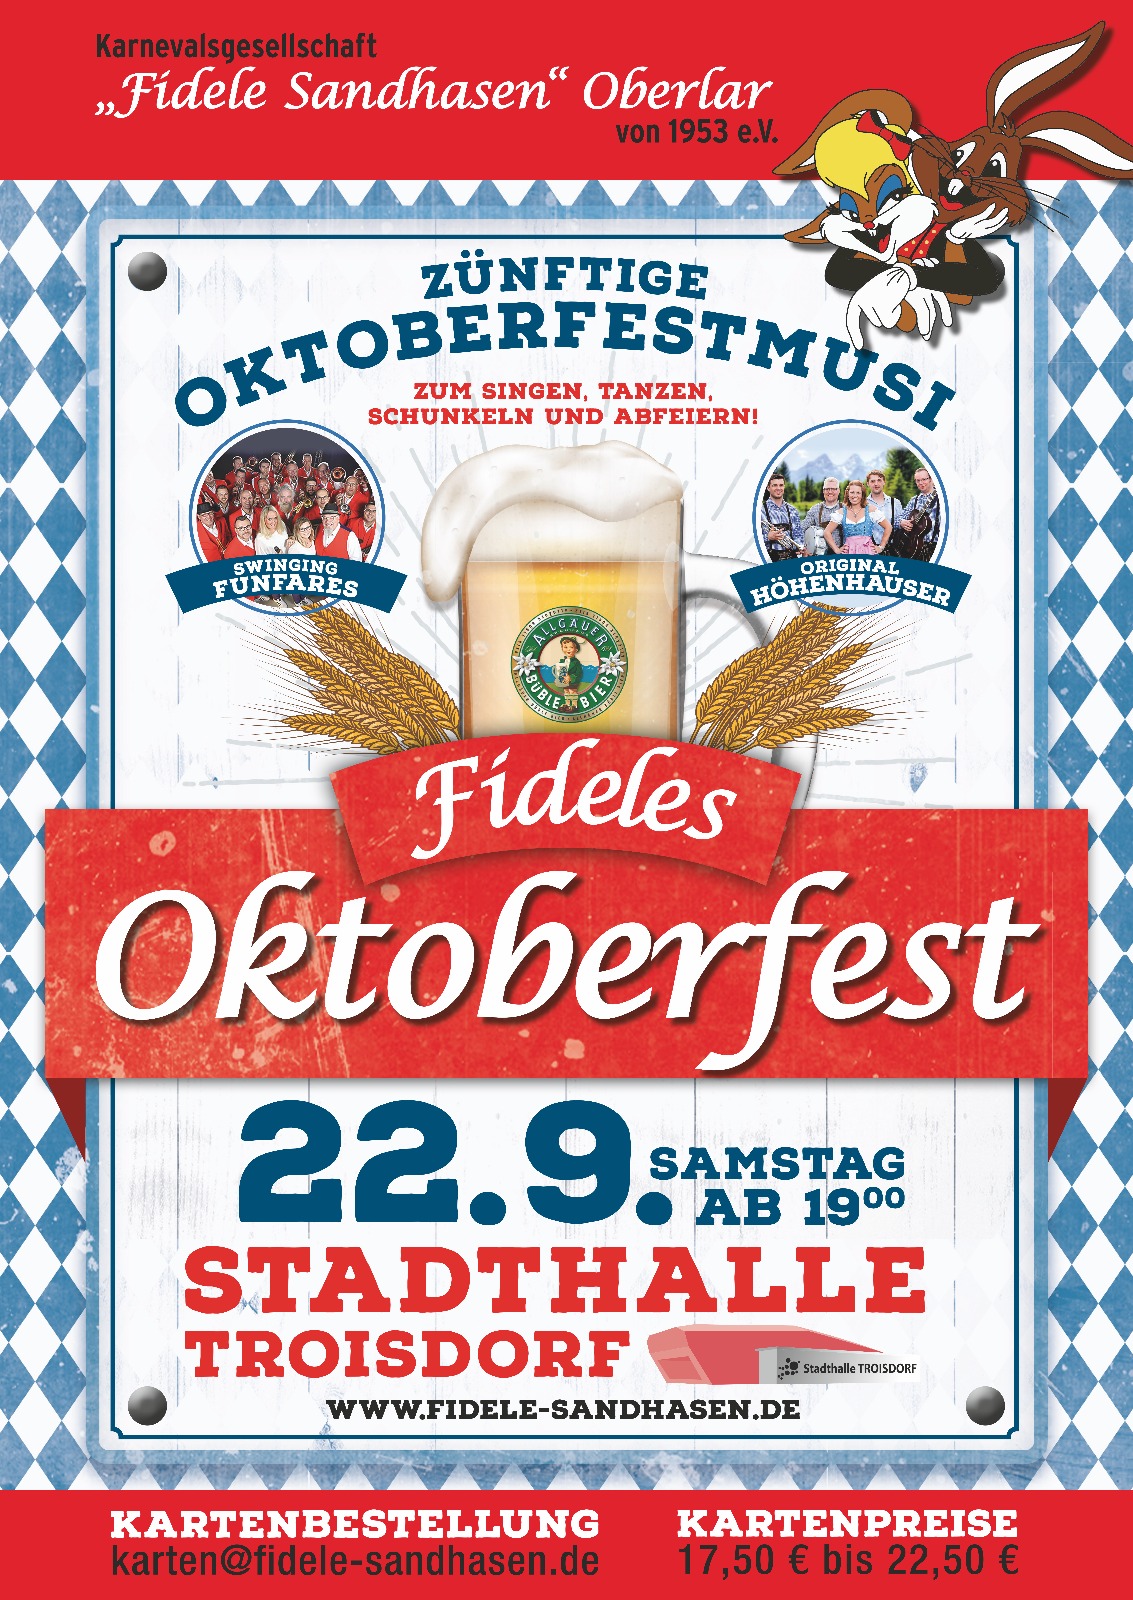 Fideles-Oktoberfest_2018.jpg - 628,36 kB